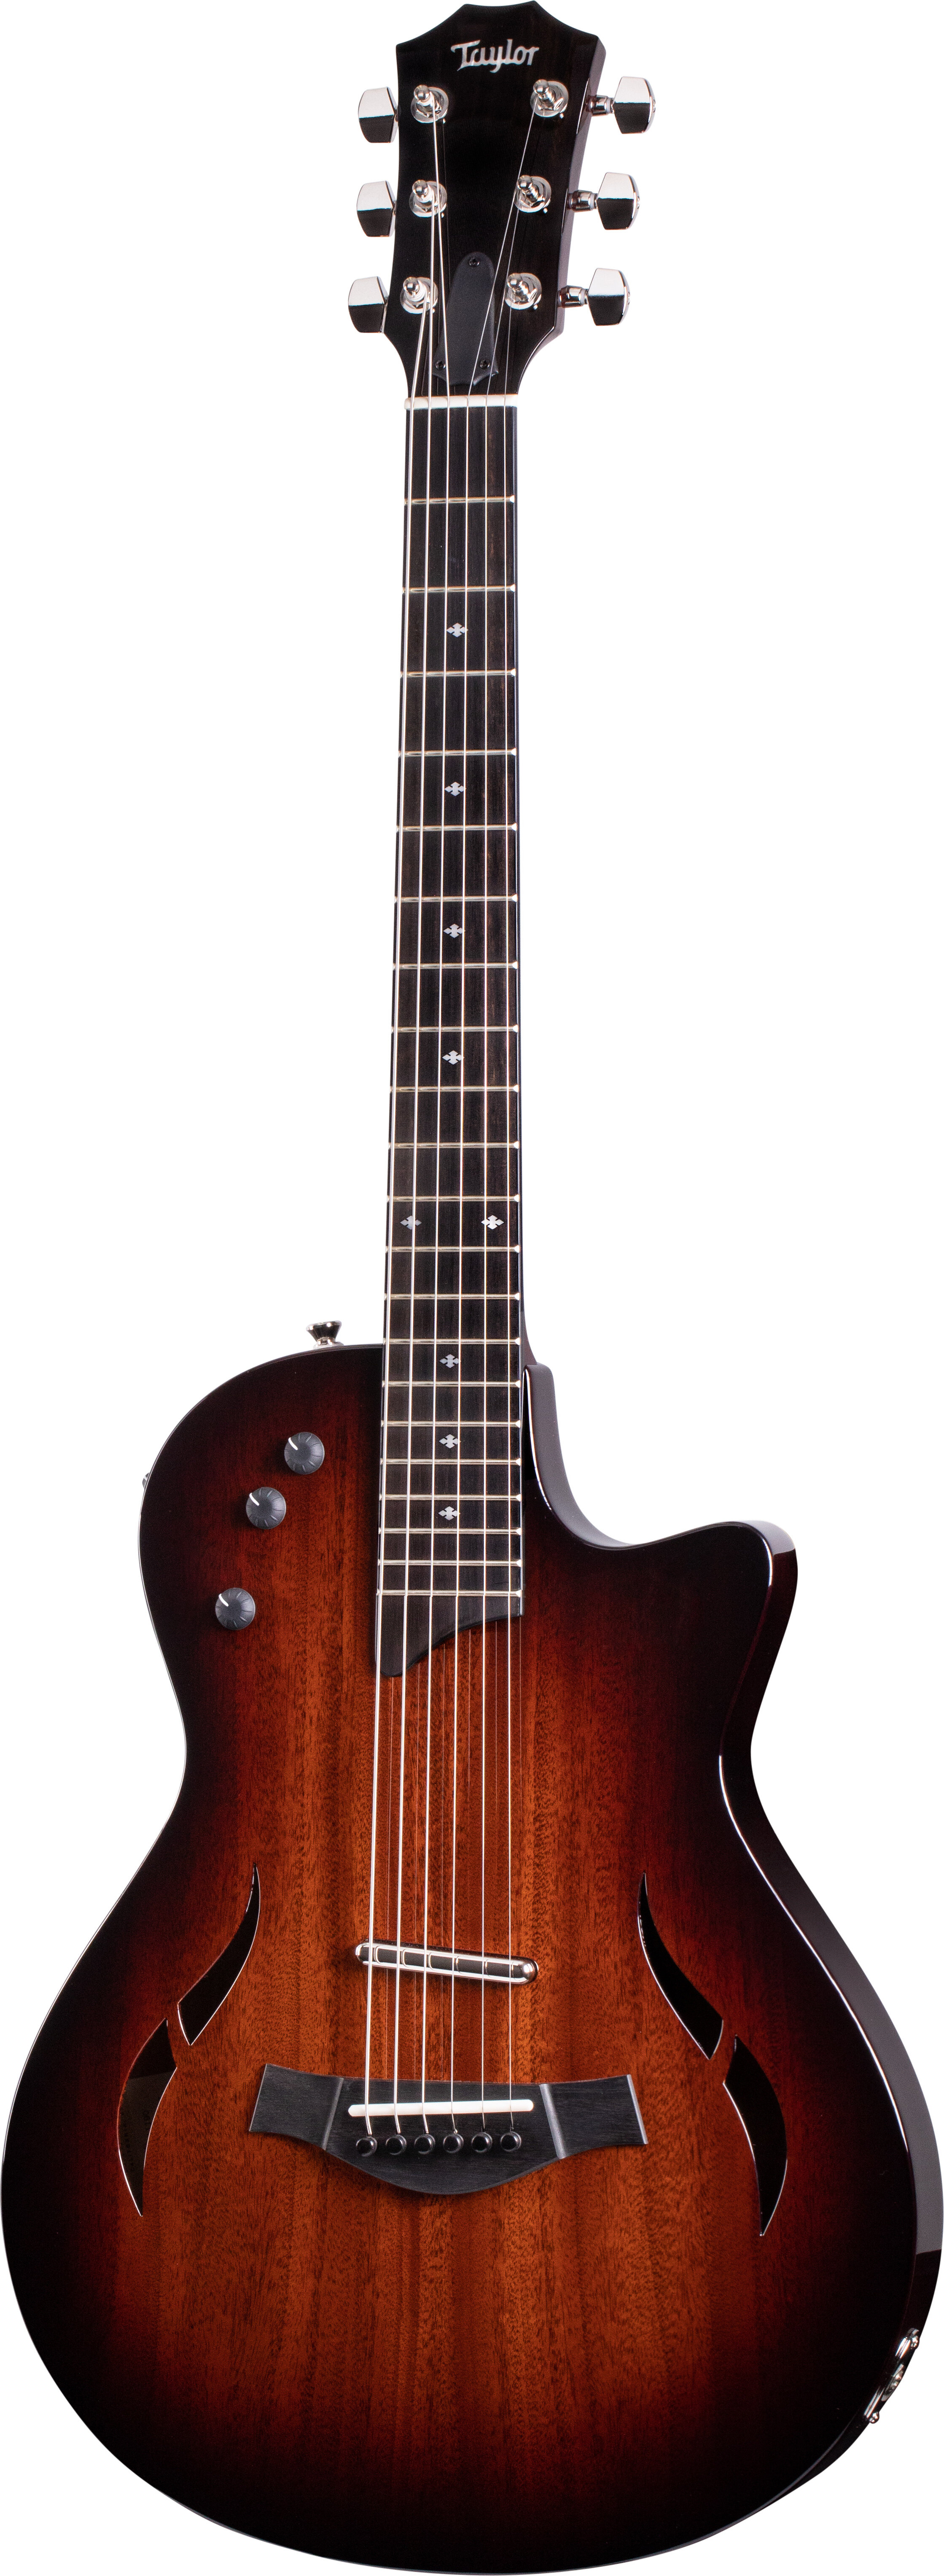 Taylor T5z Classic DLX Electric Acoustic Guitar -  Taylor Guitars, T5z-Classic-DLX